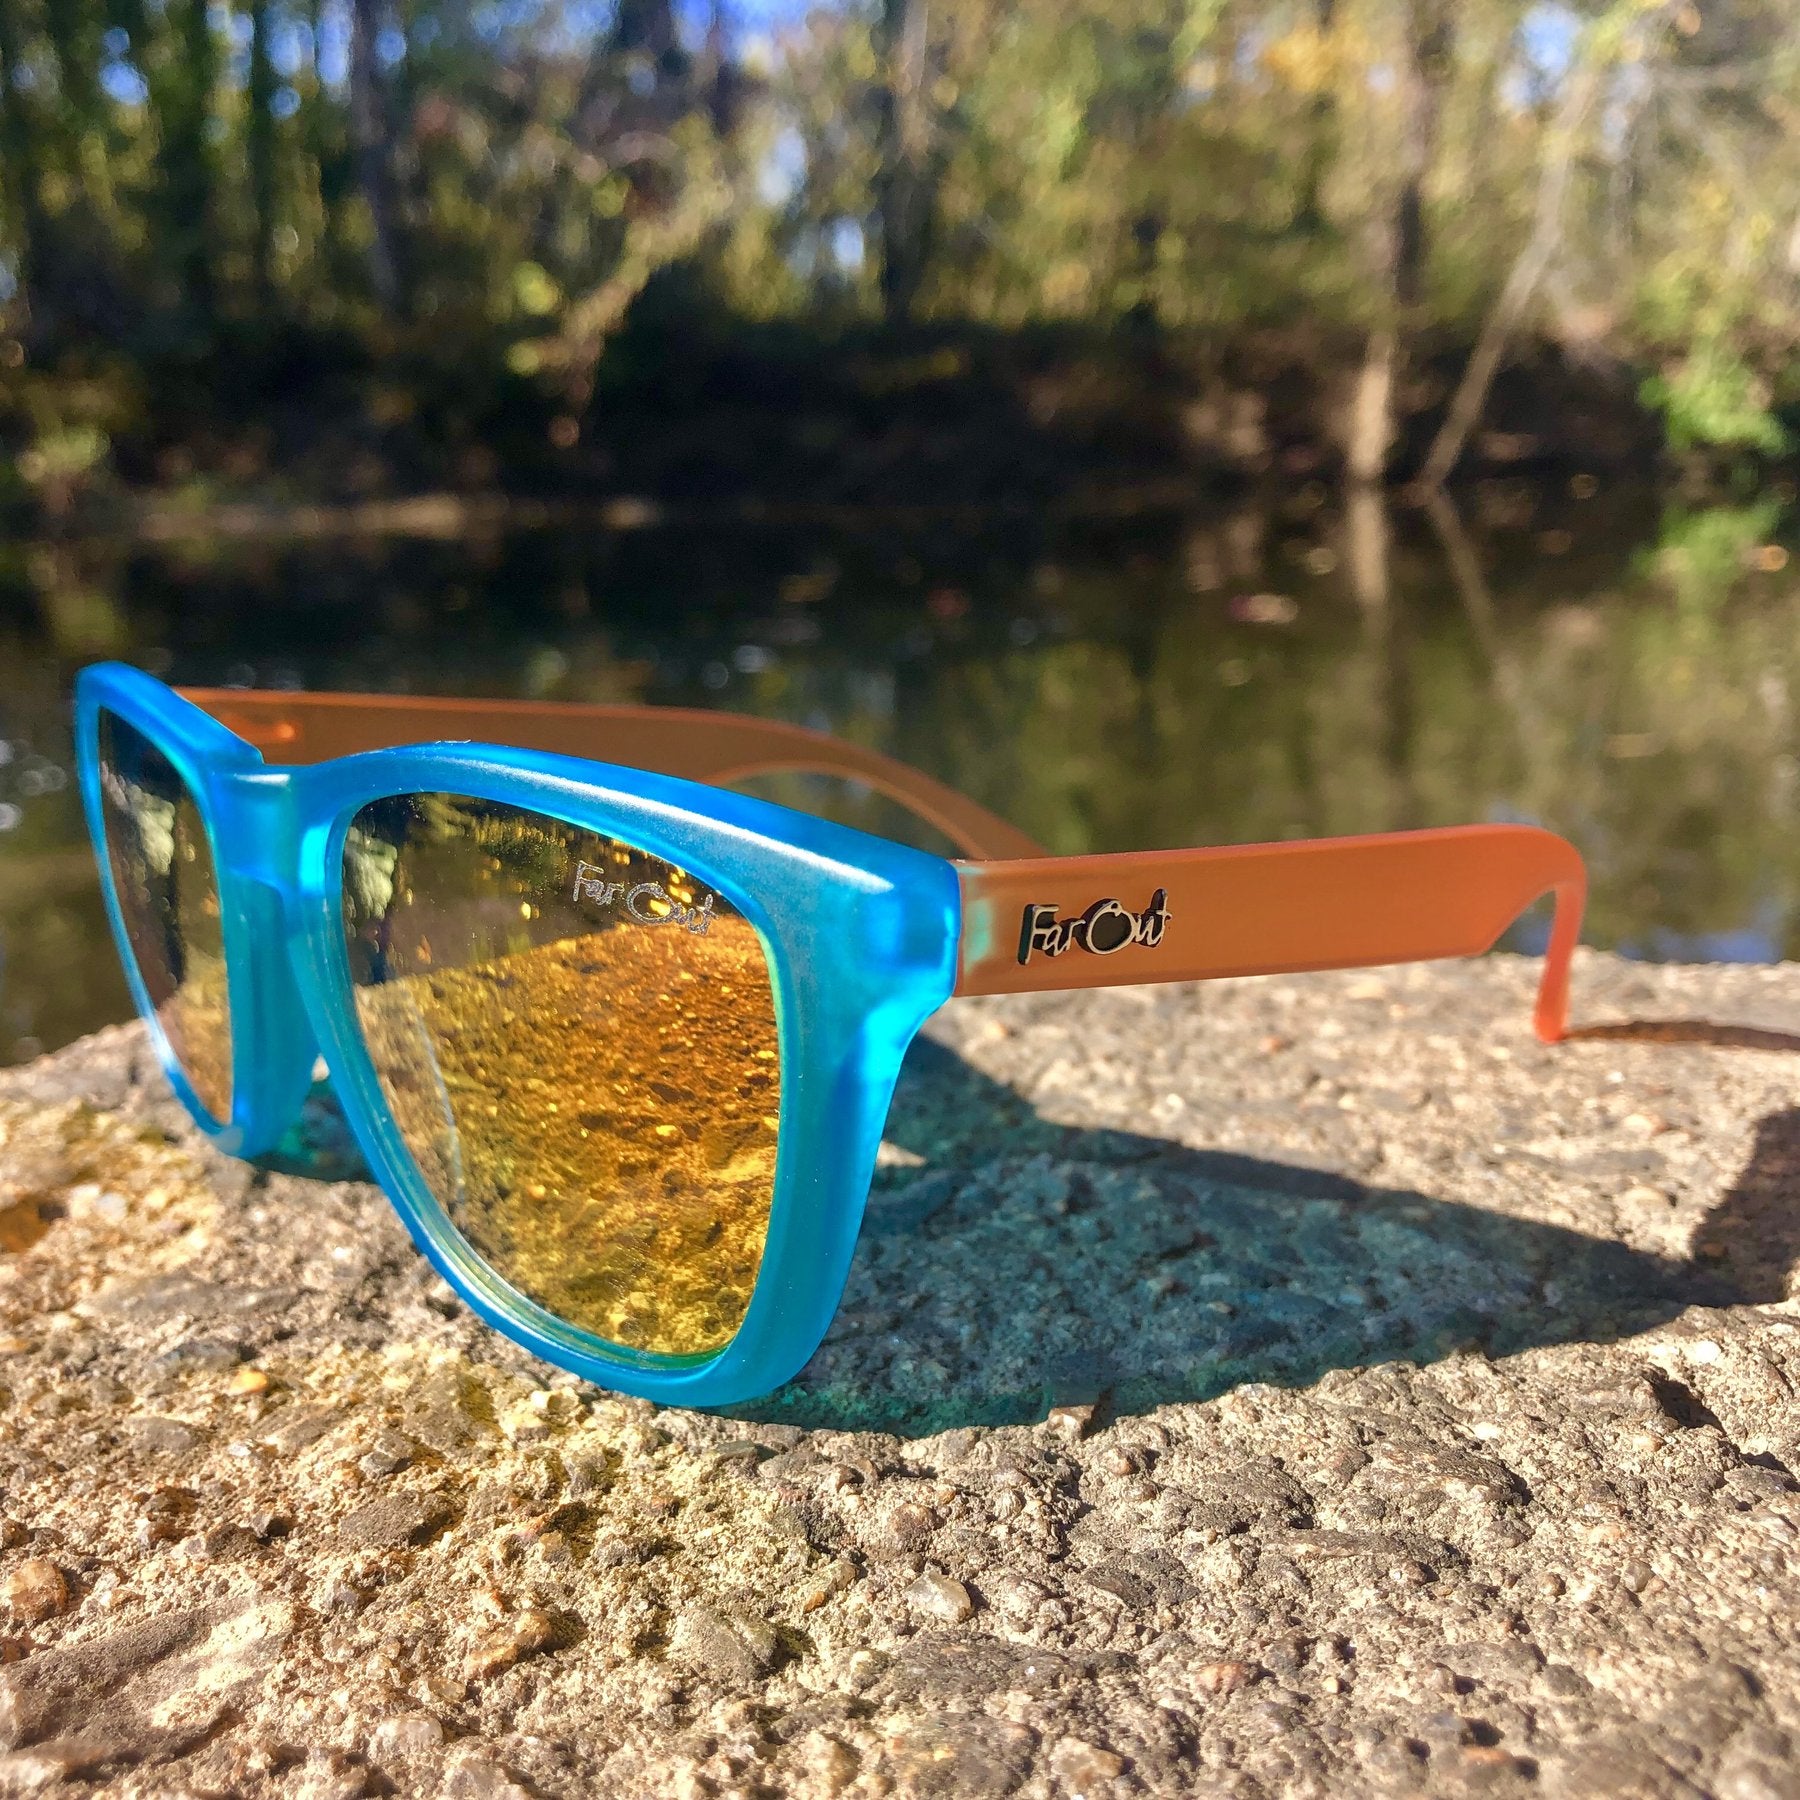 FarOut Sunglasses - Miami Vice Premiums Orange Lens